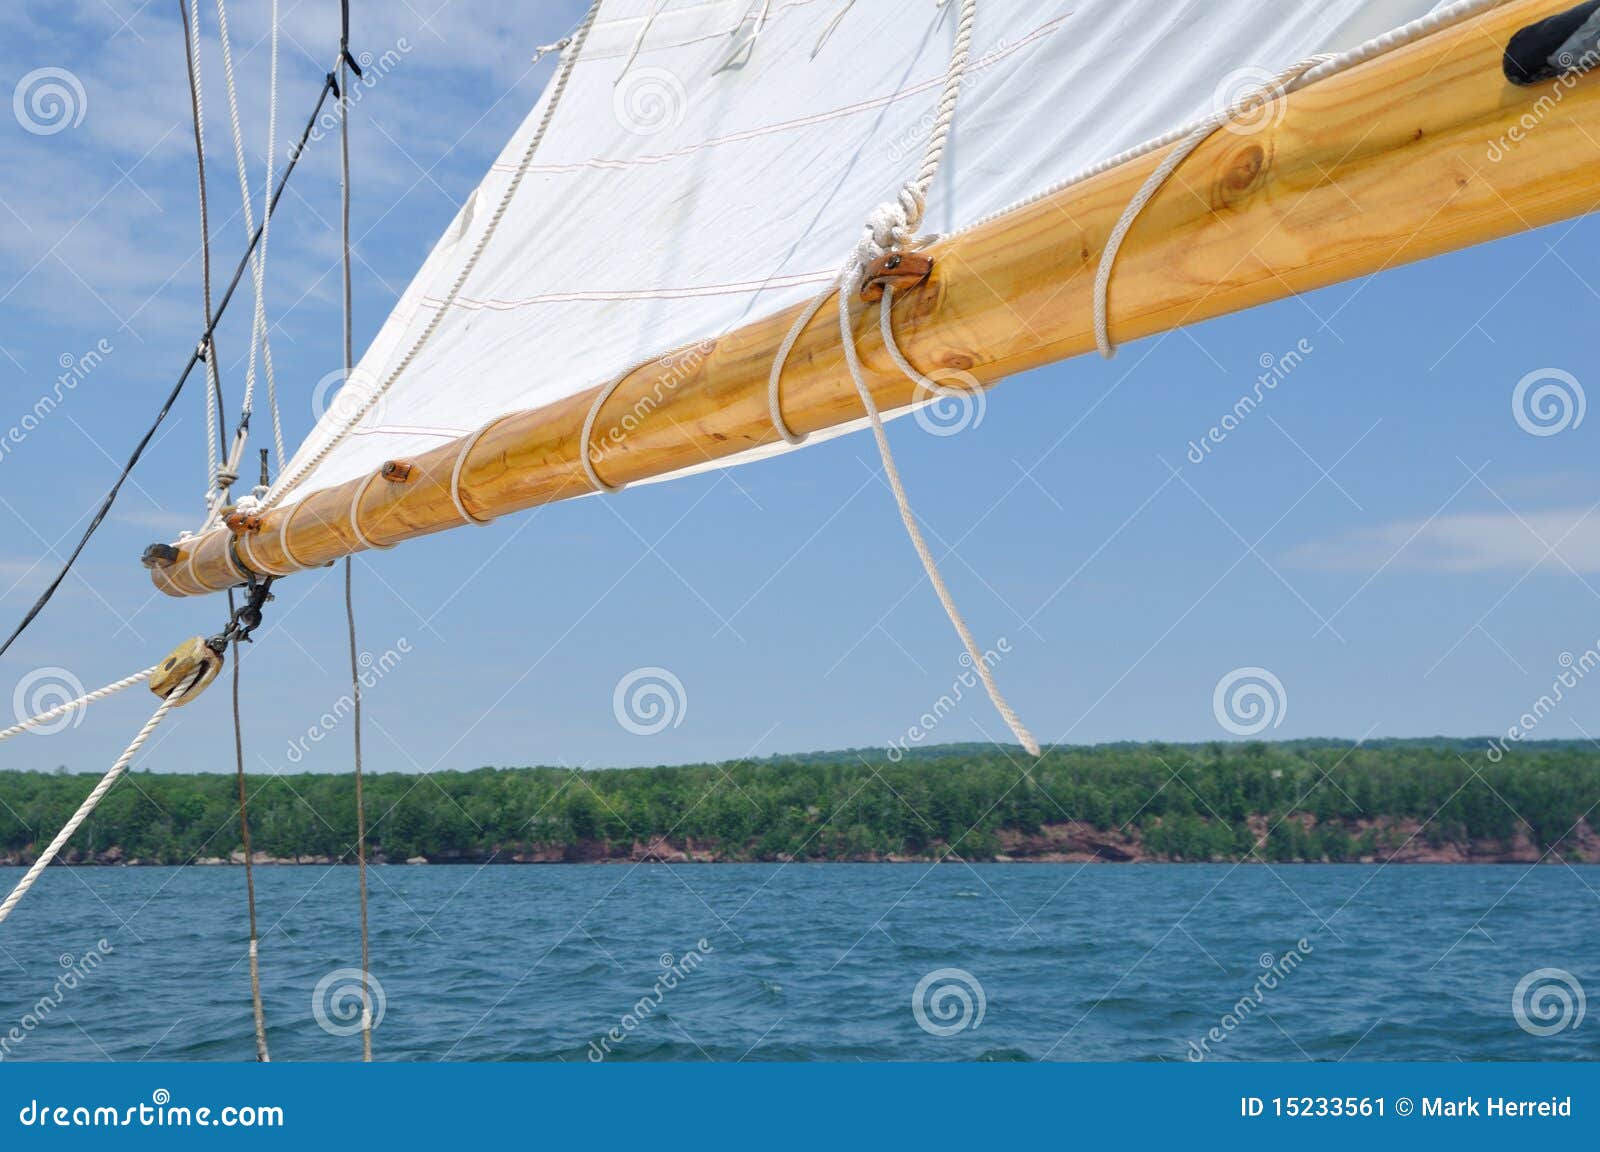 boom replacement sailboat